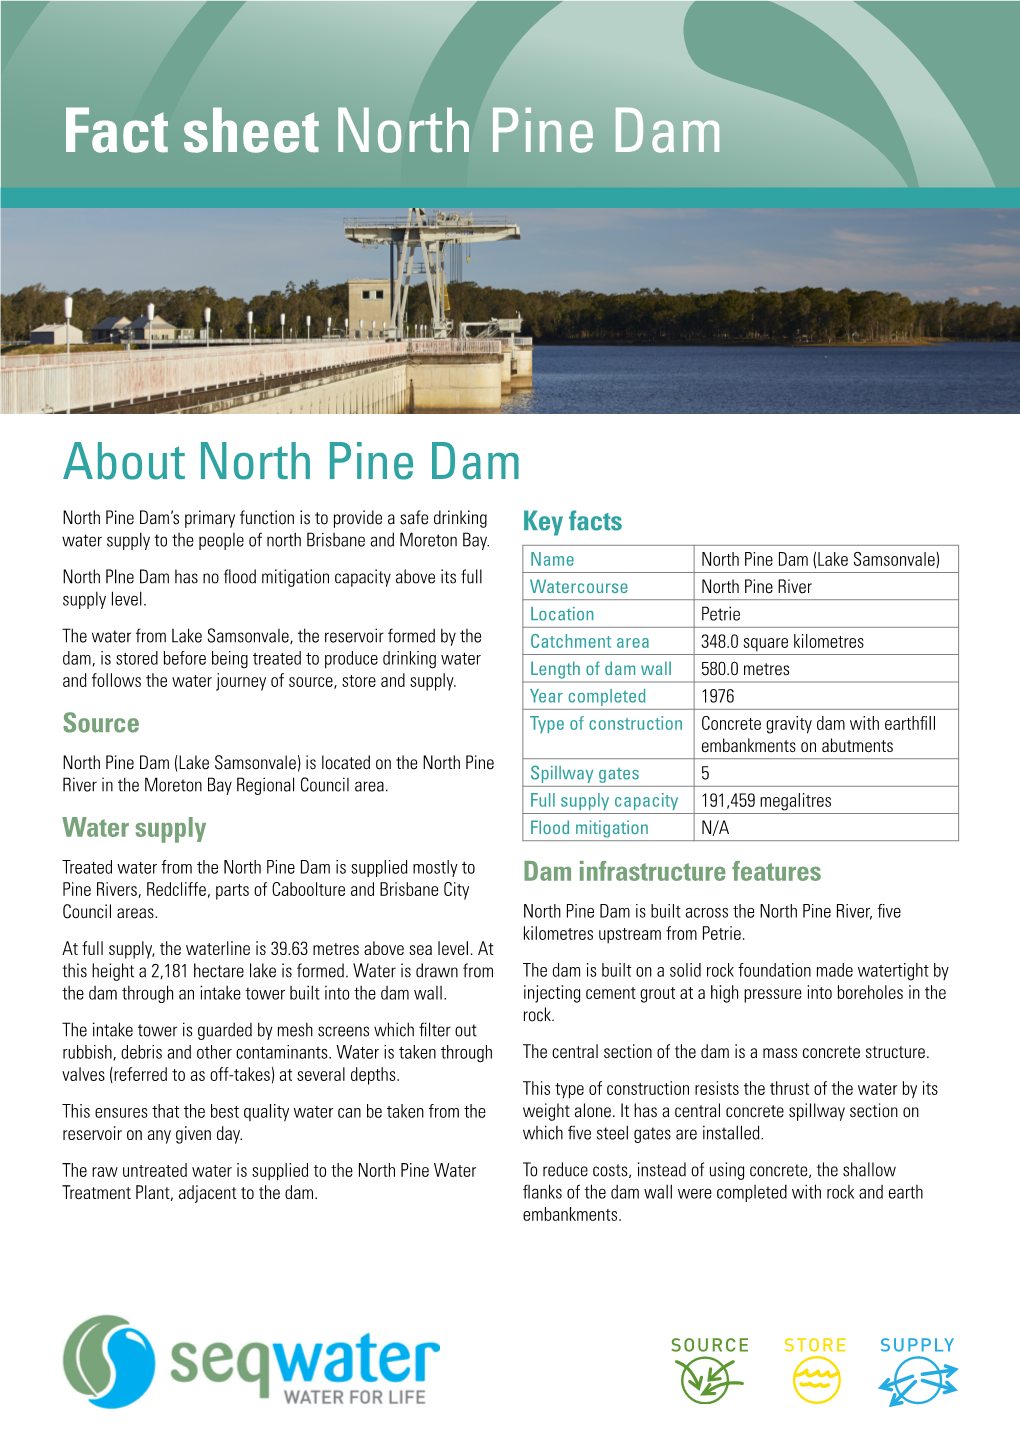 Fact Sheet North Pine Dam